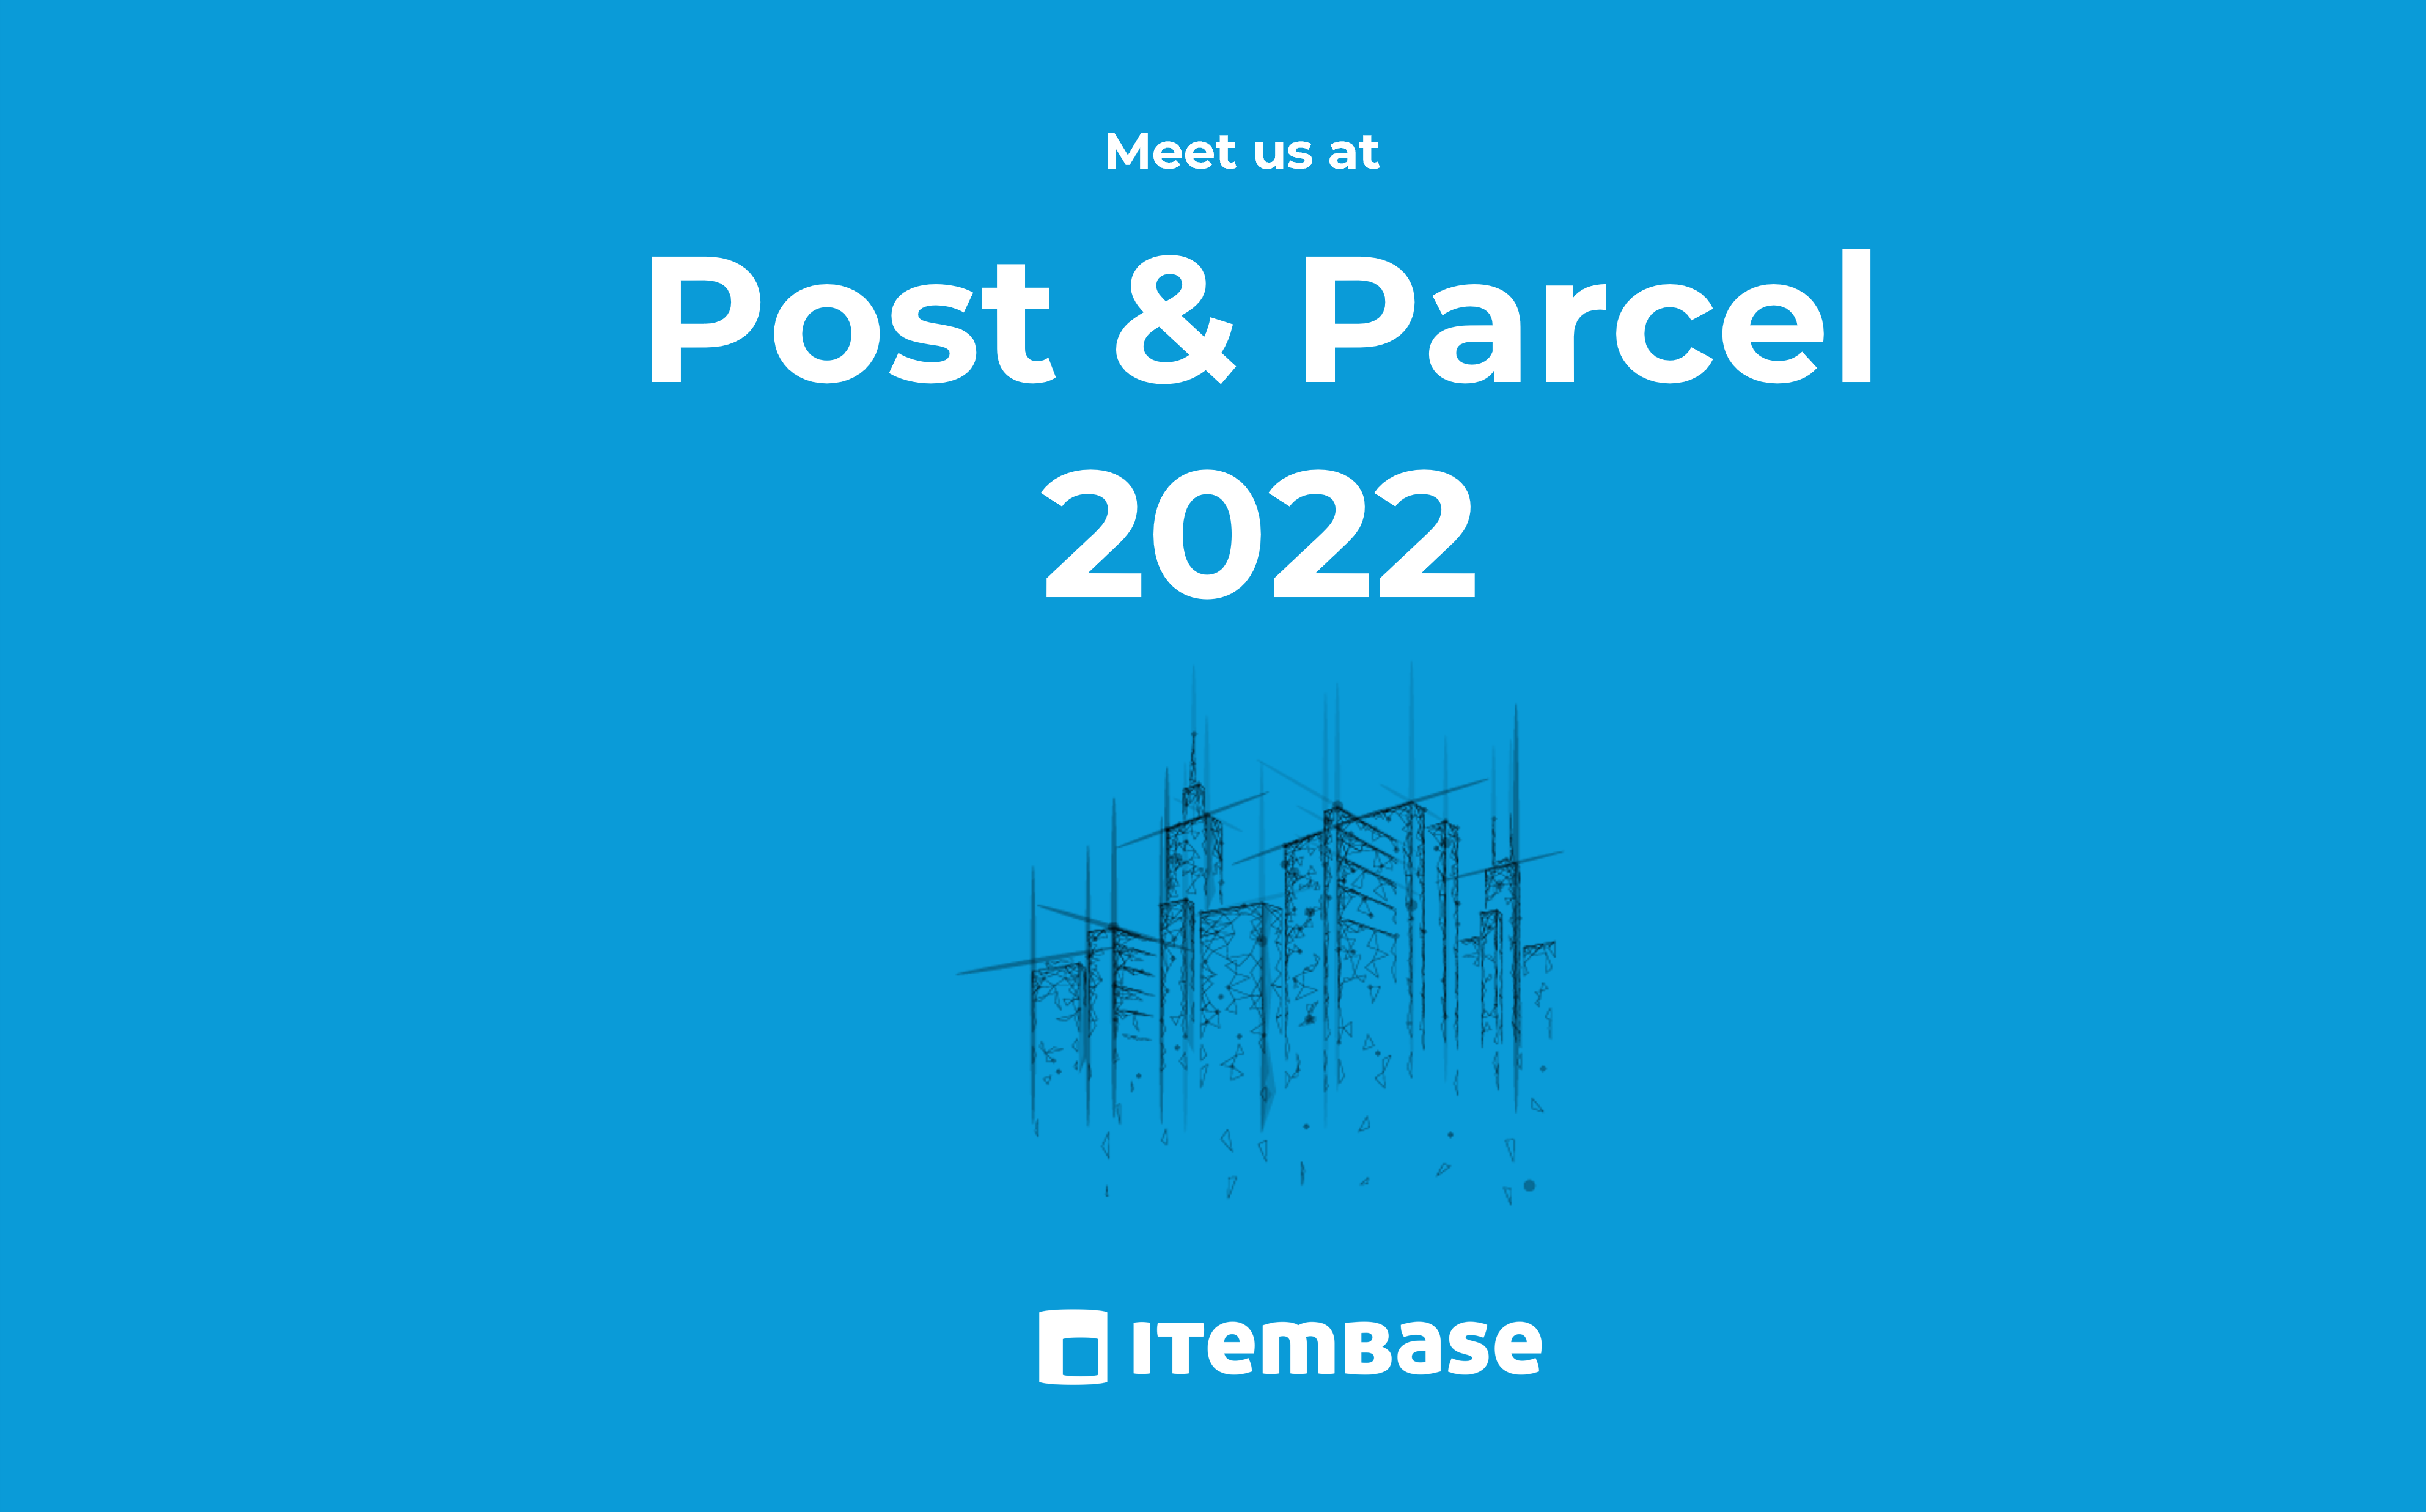 Meet Itembase at Post & Parcel 2022